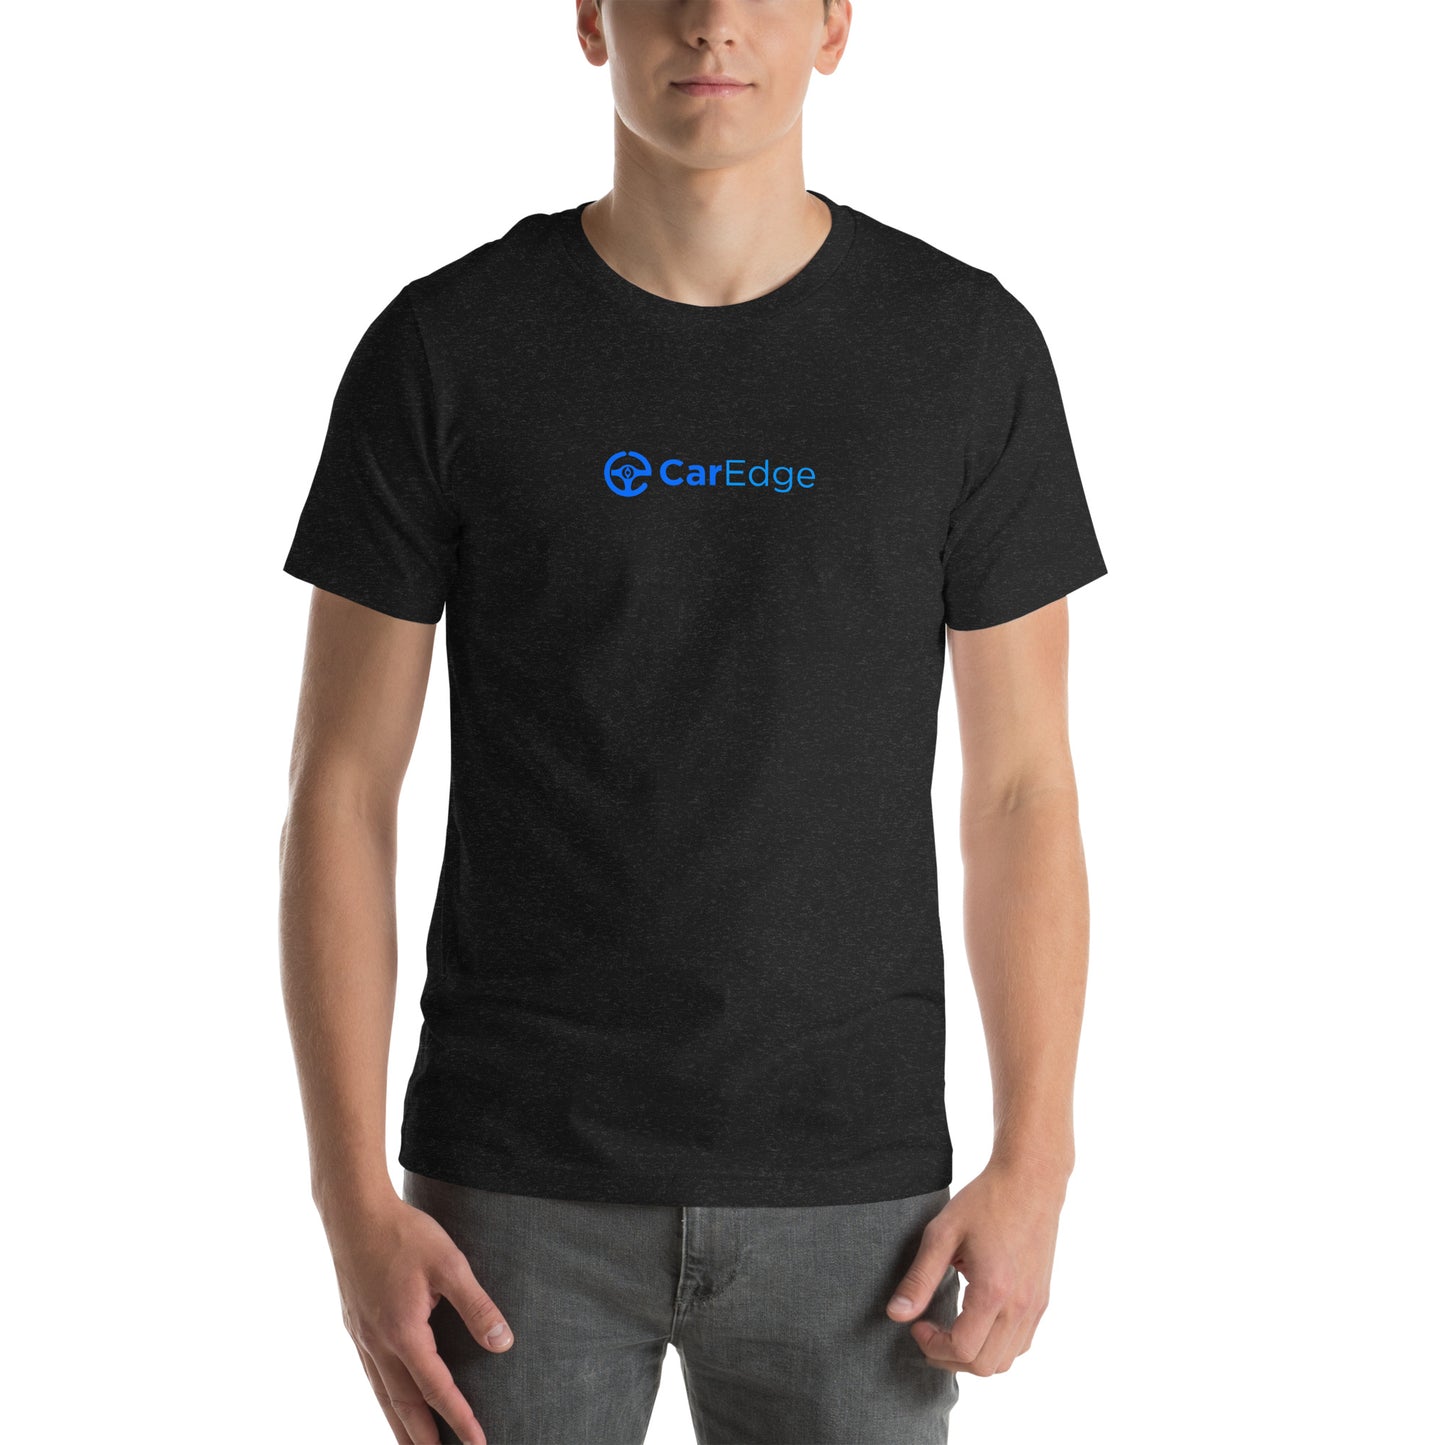 CarEdge T-Shirt - Unisex